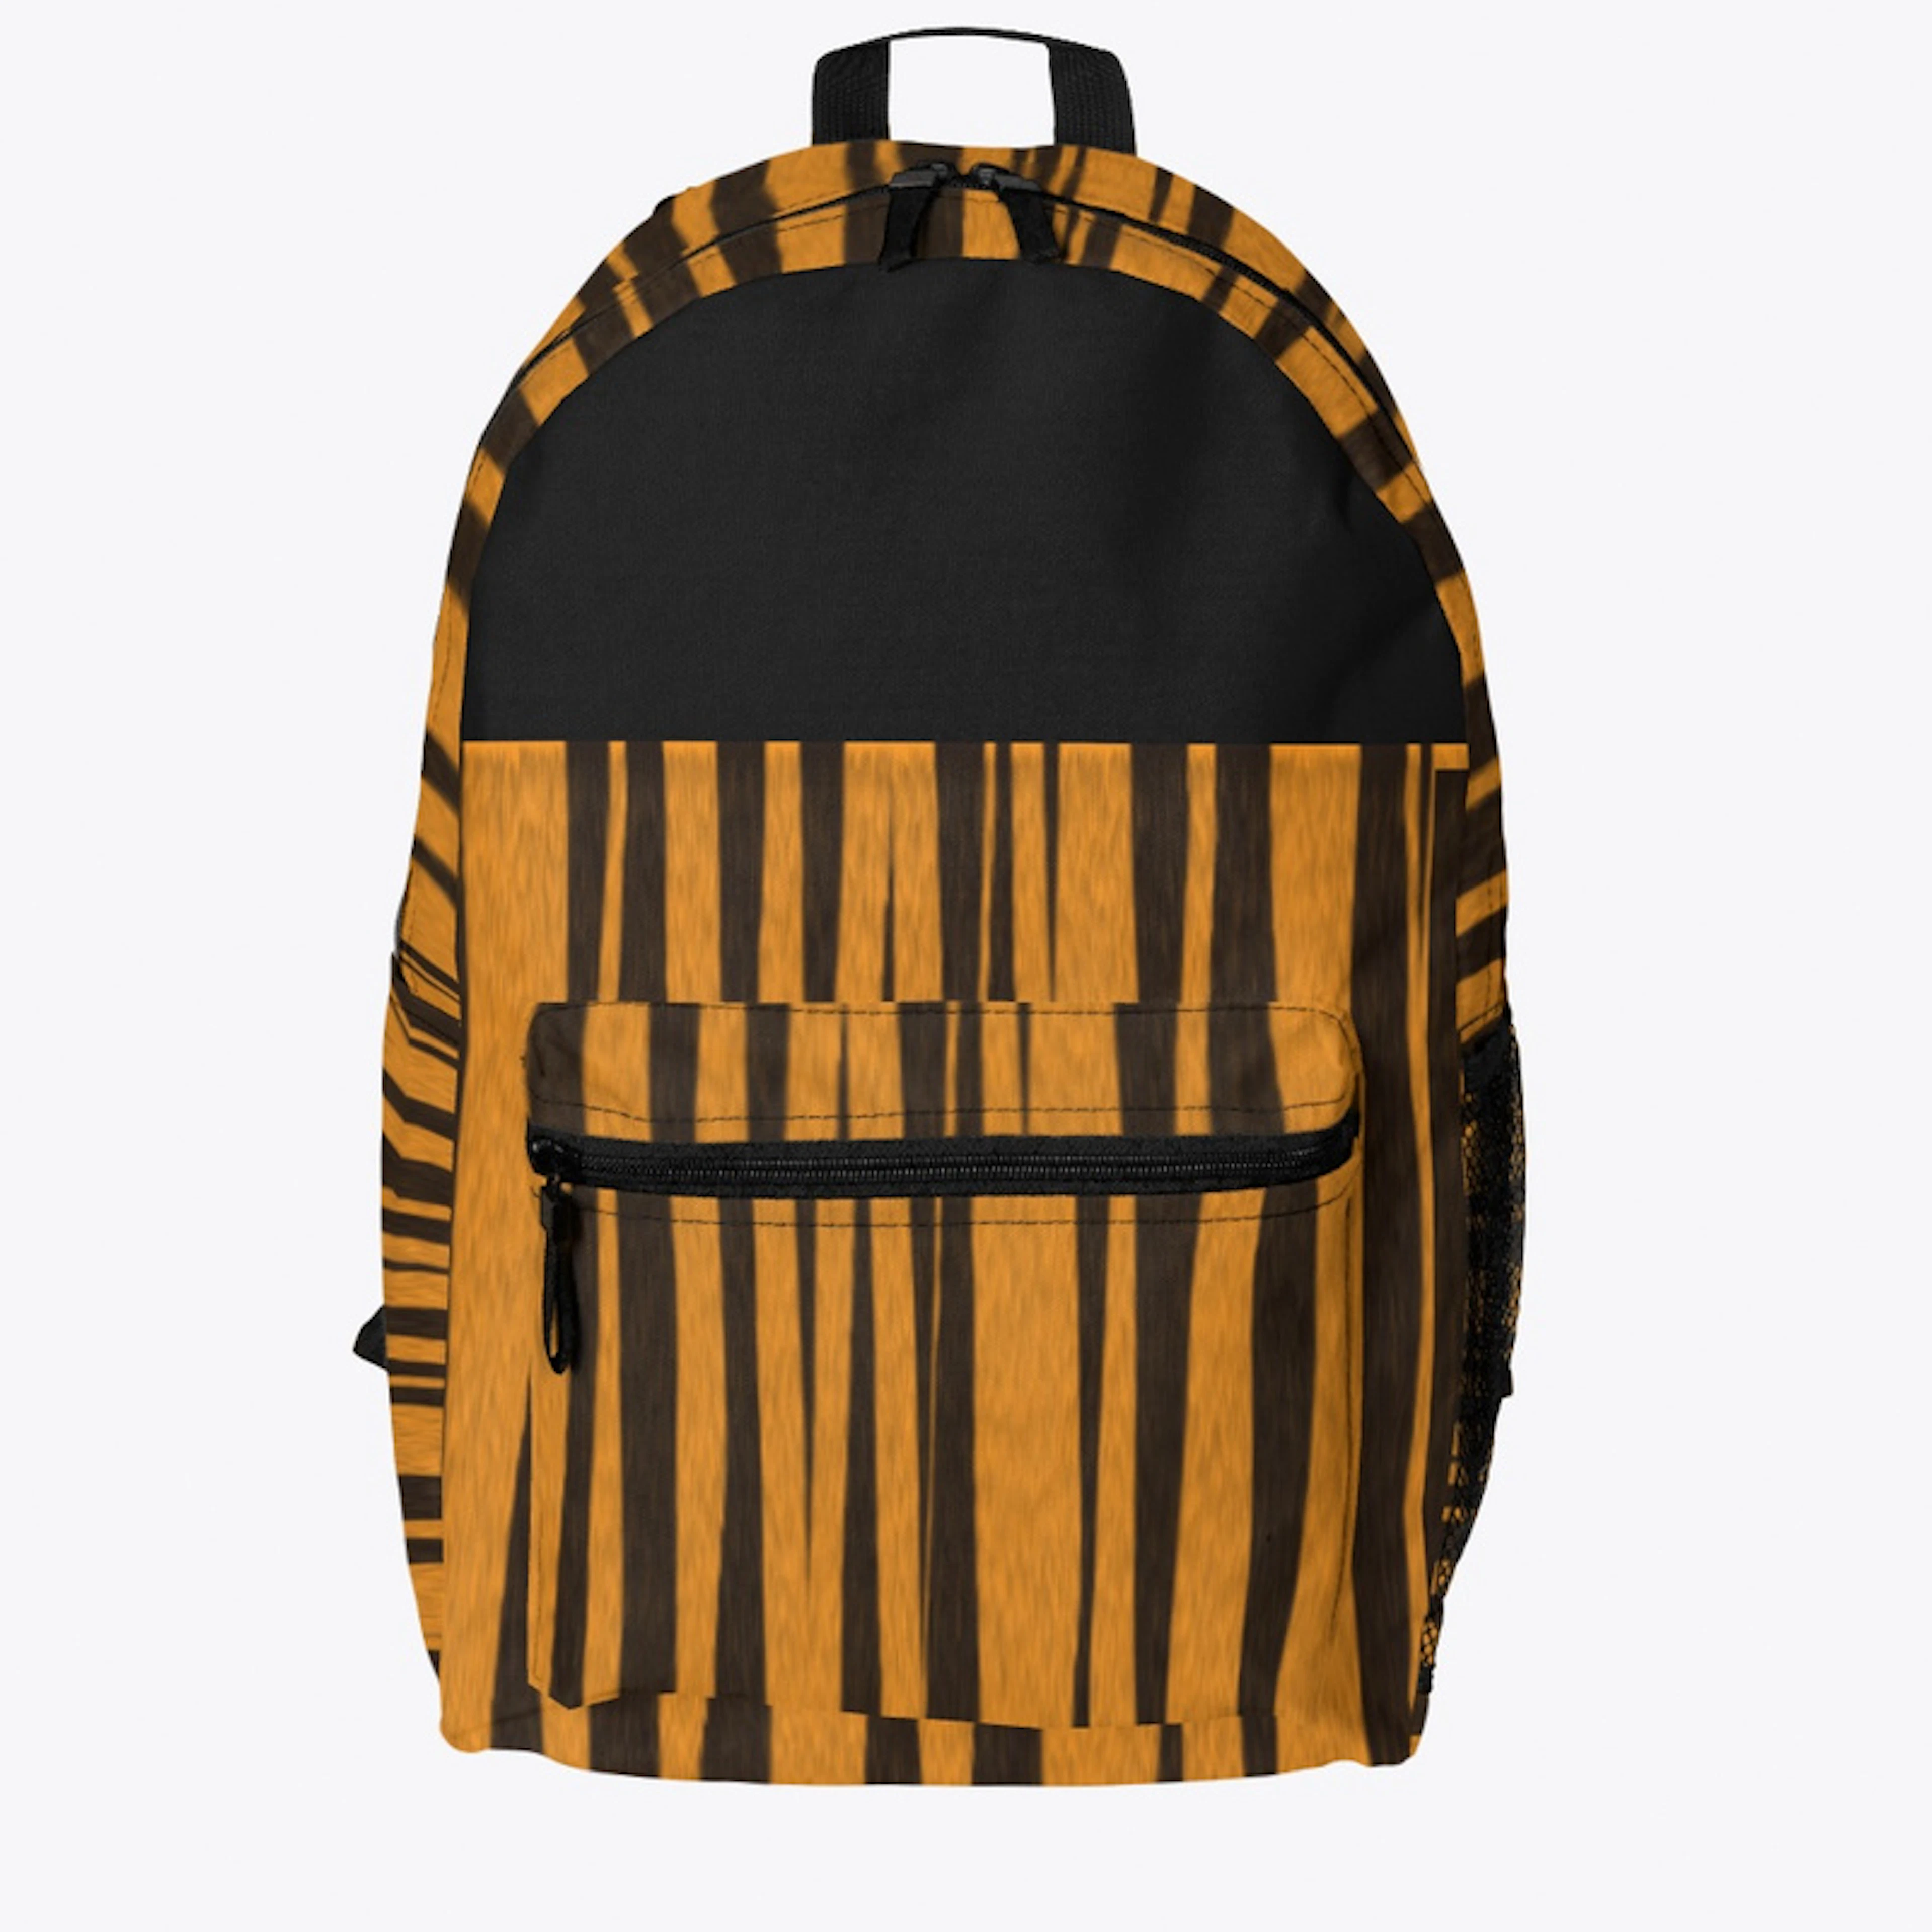 Tiger Stripes Textured Pattern